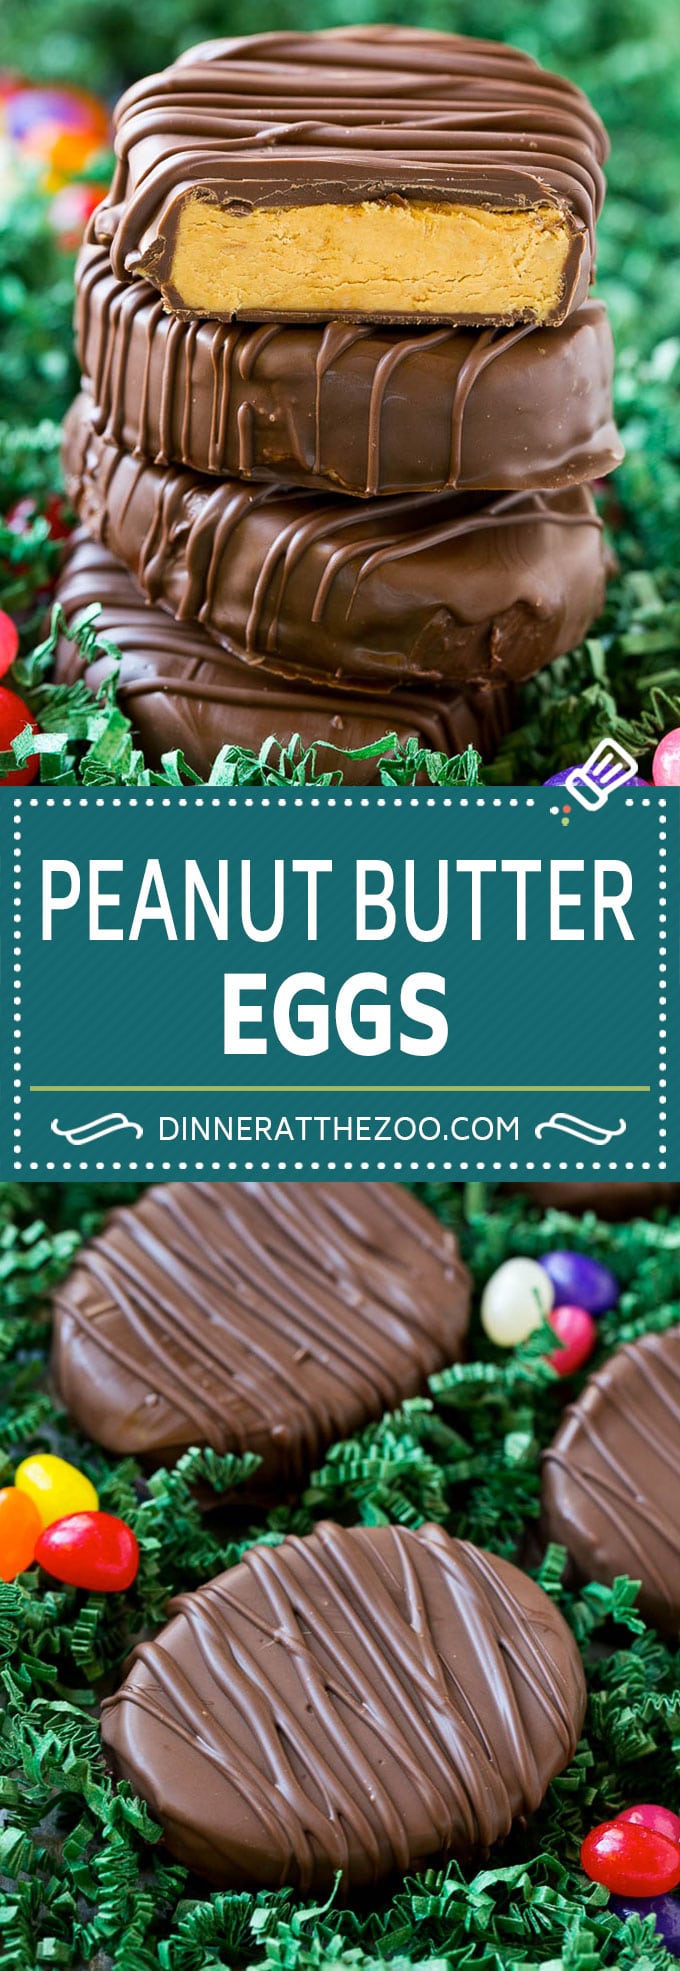 Peanut Butter Eggs | Reese's Eggs | Homemade Peanut Butter Cups | Easter Dessert Recipe #peanutbutter #chocolate #easter #eastereggs #candy #dessert #dinneratthezoo